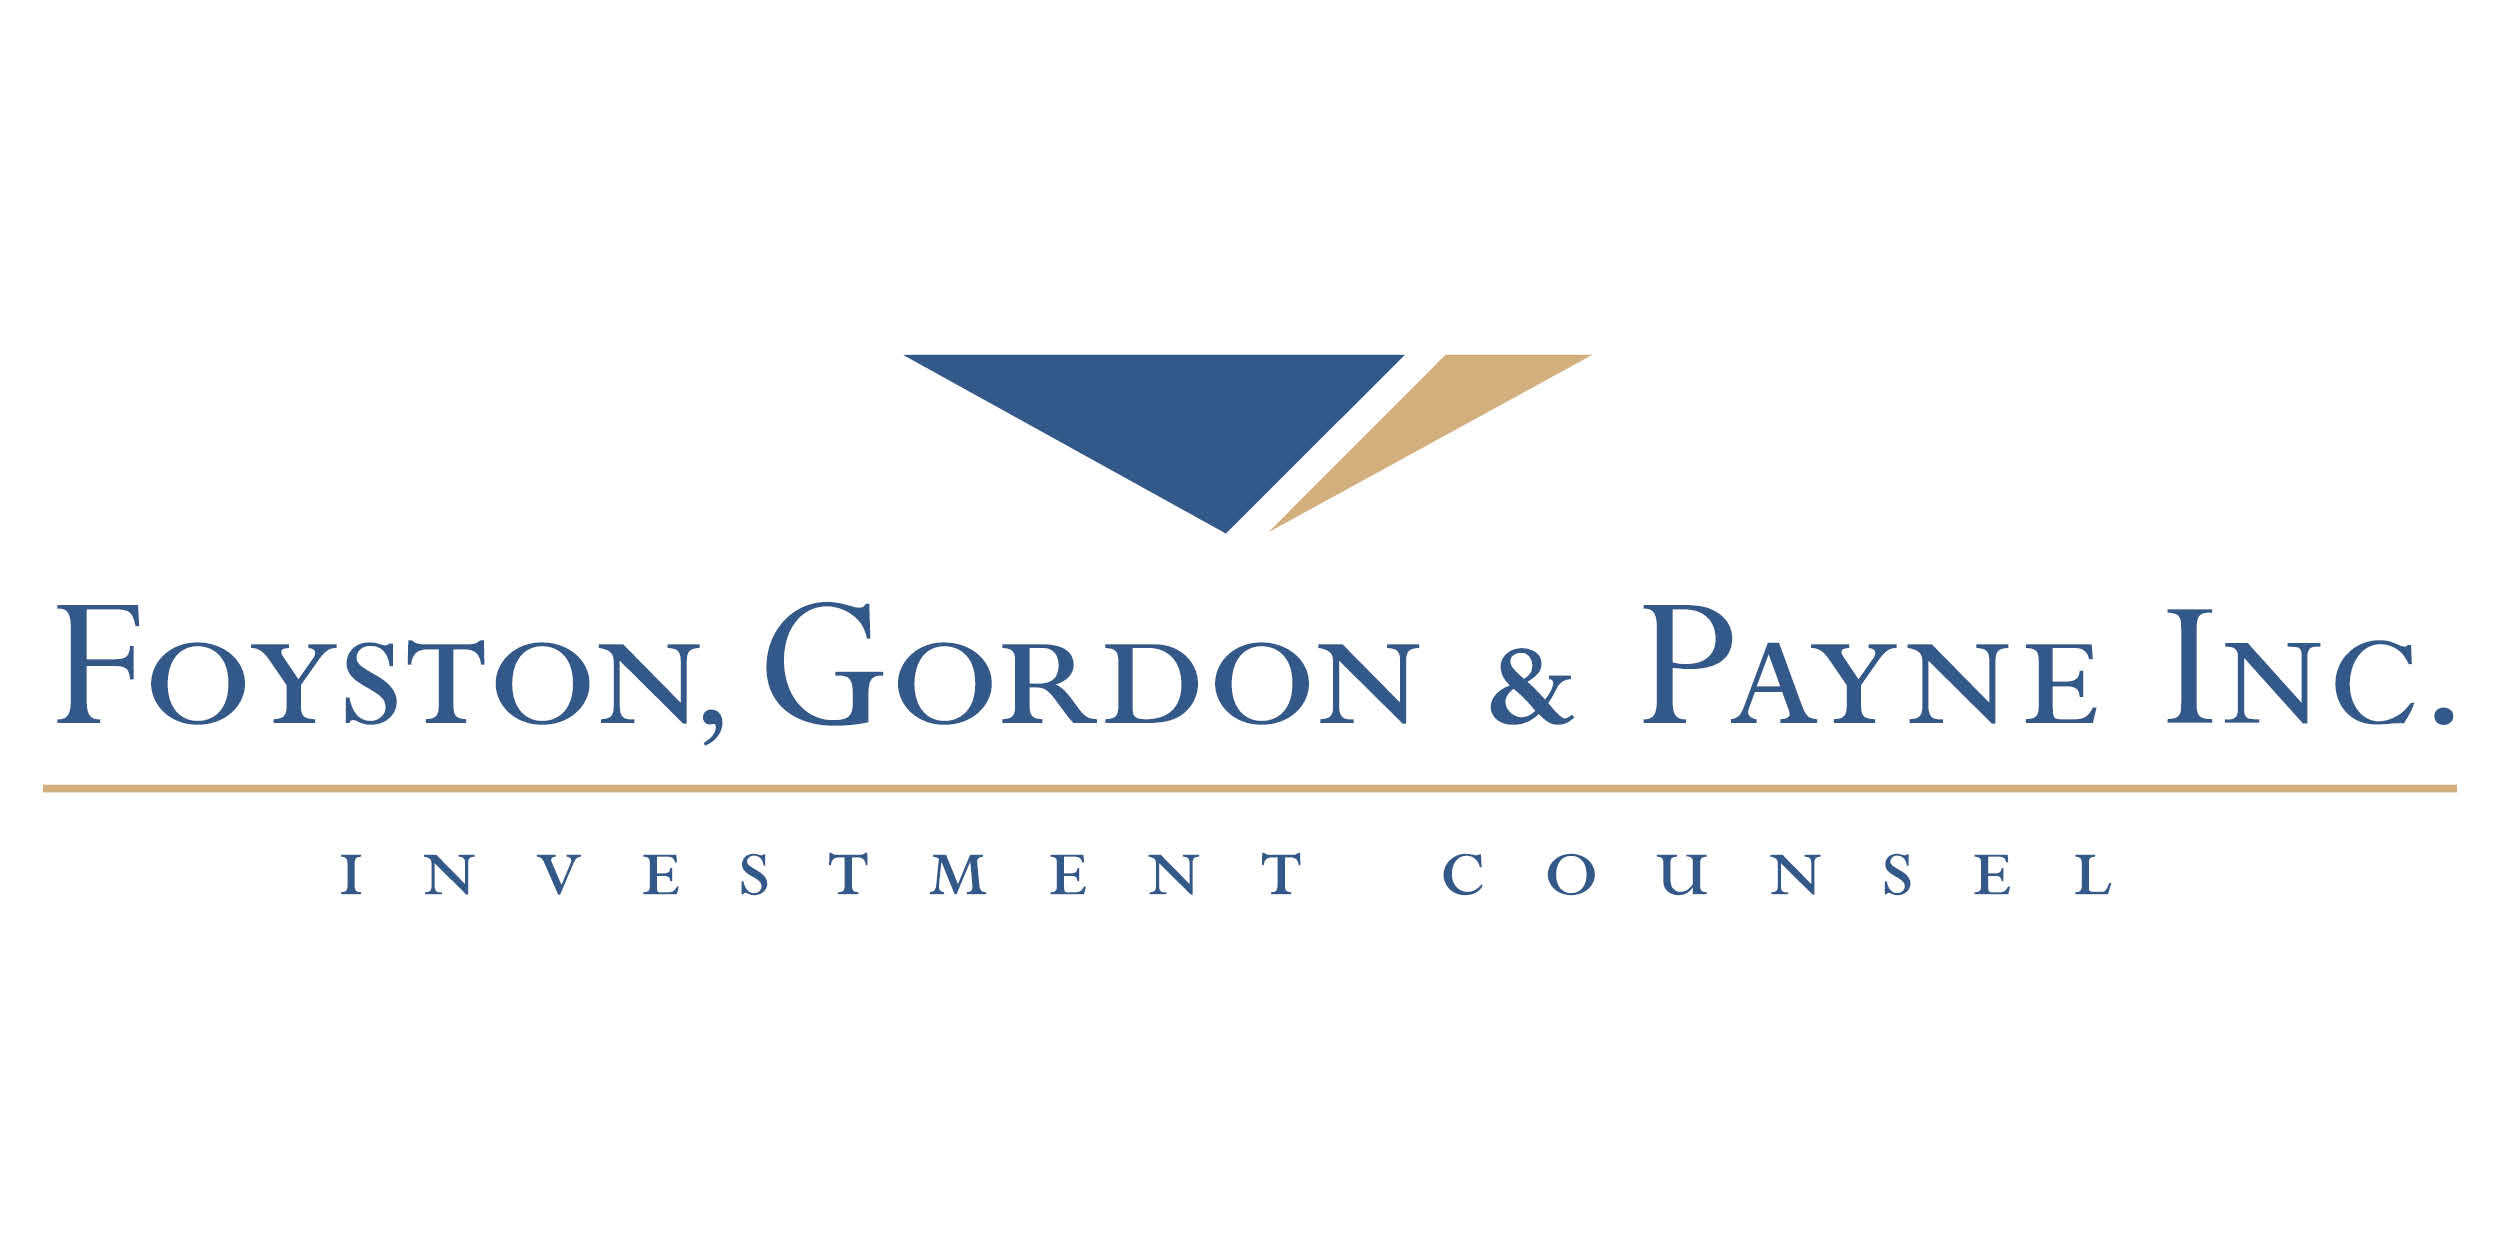 Foyston, Gordon & Payne Inc. Investment Councel